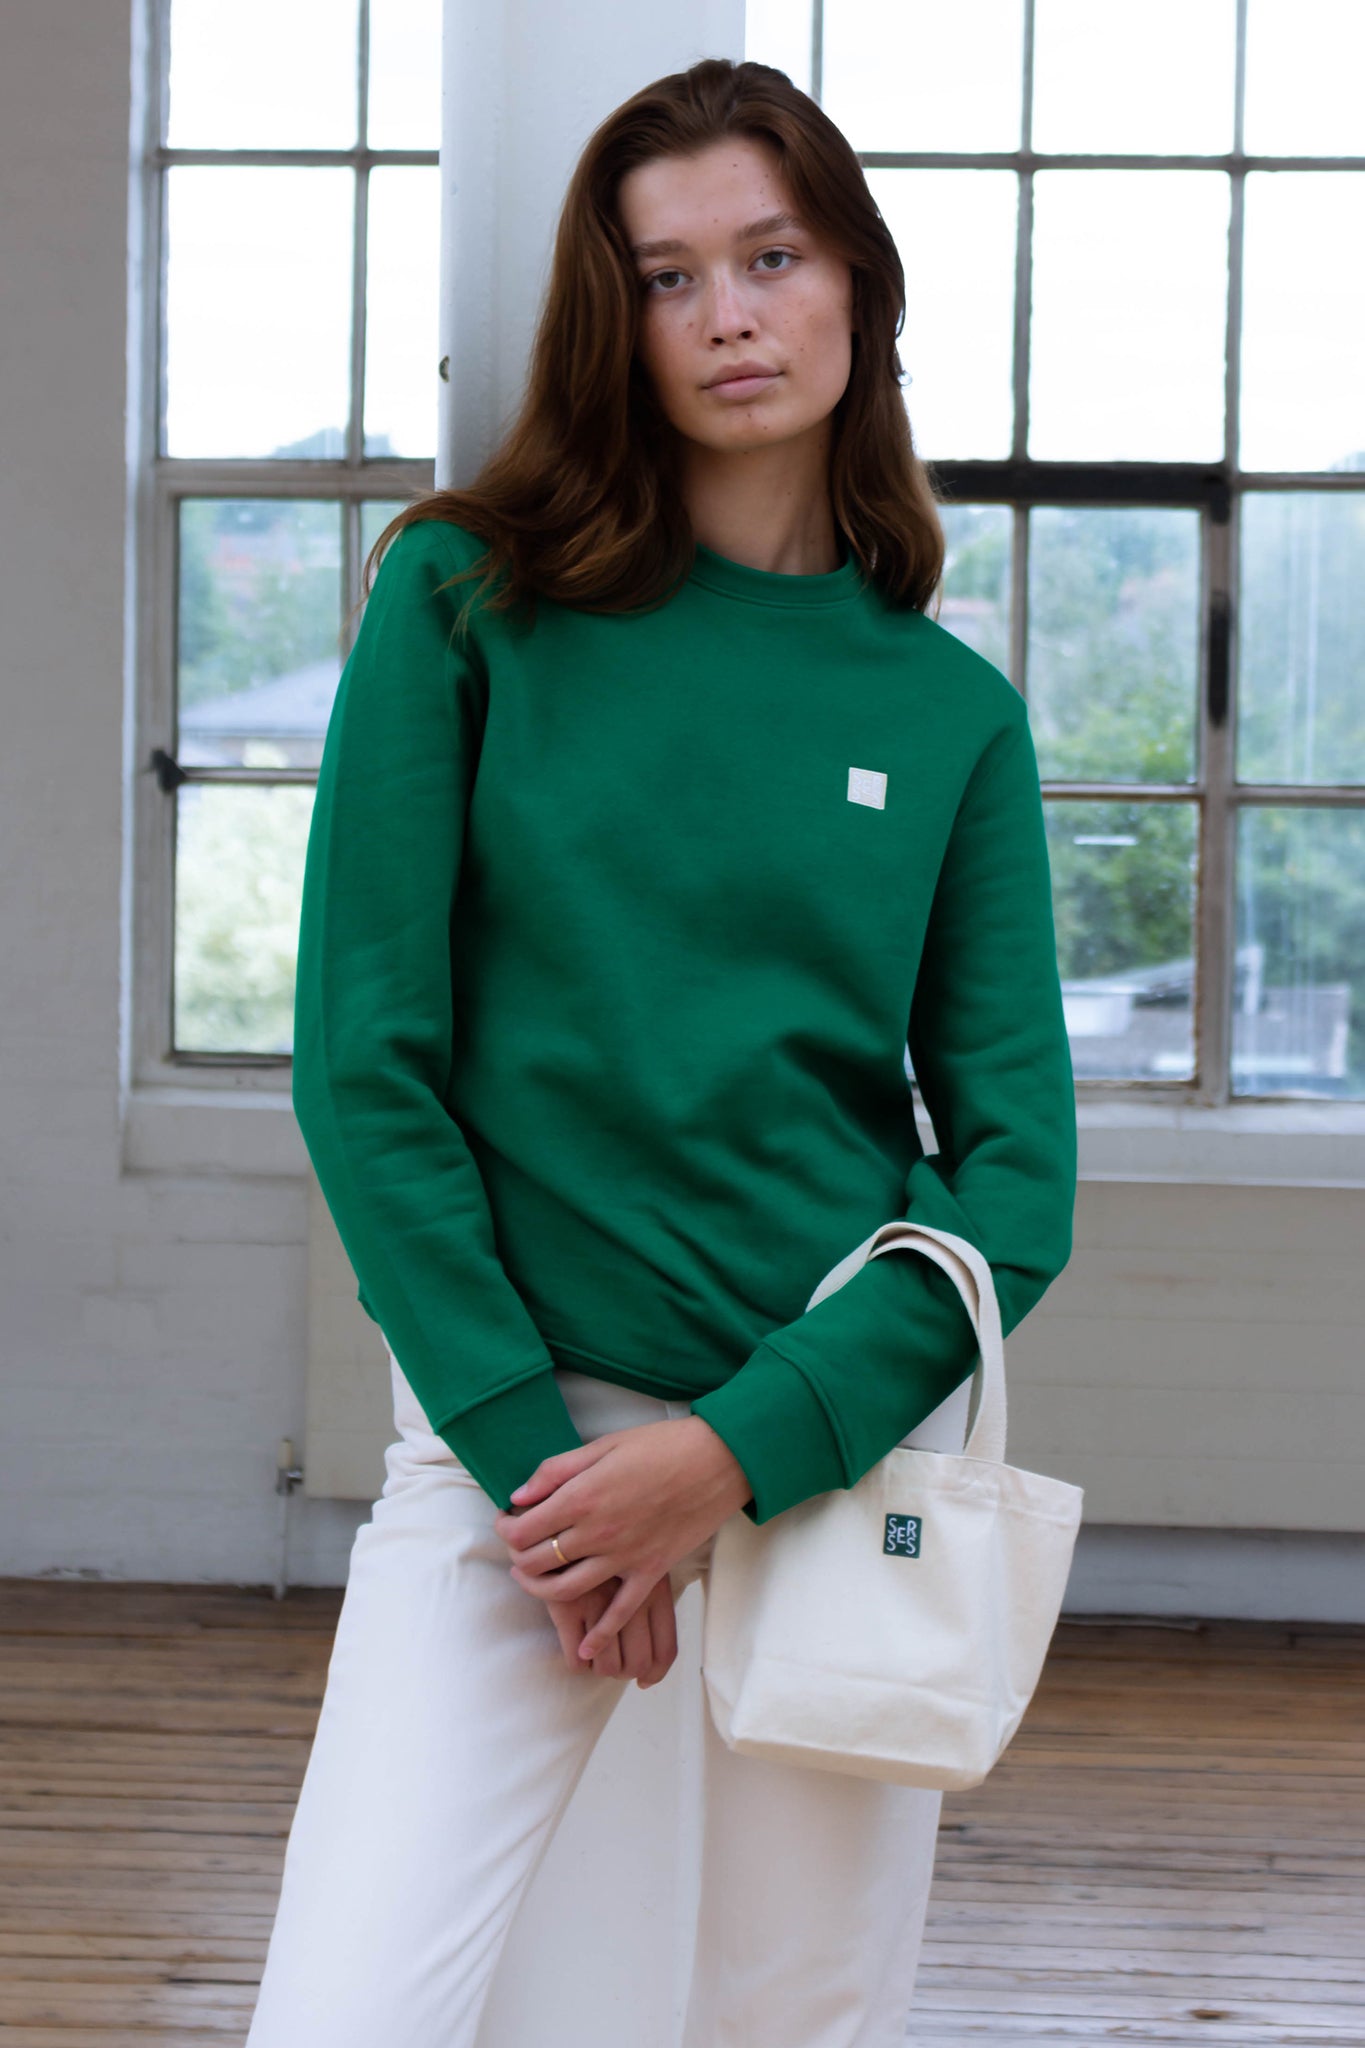 Monogram Organic Sweatshirt in Wimbledon Green